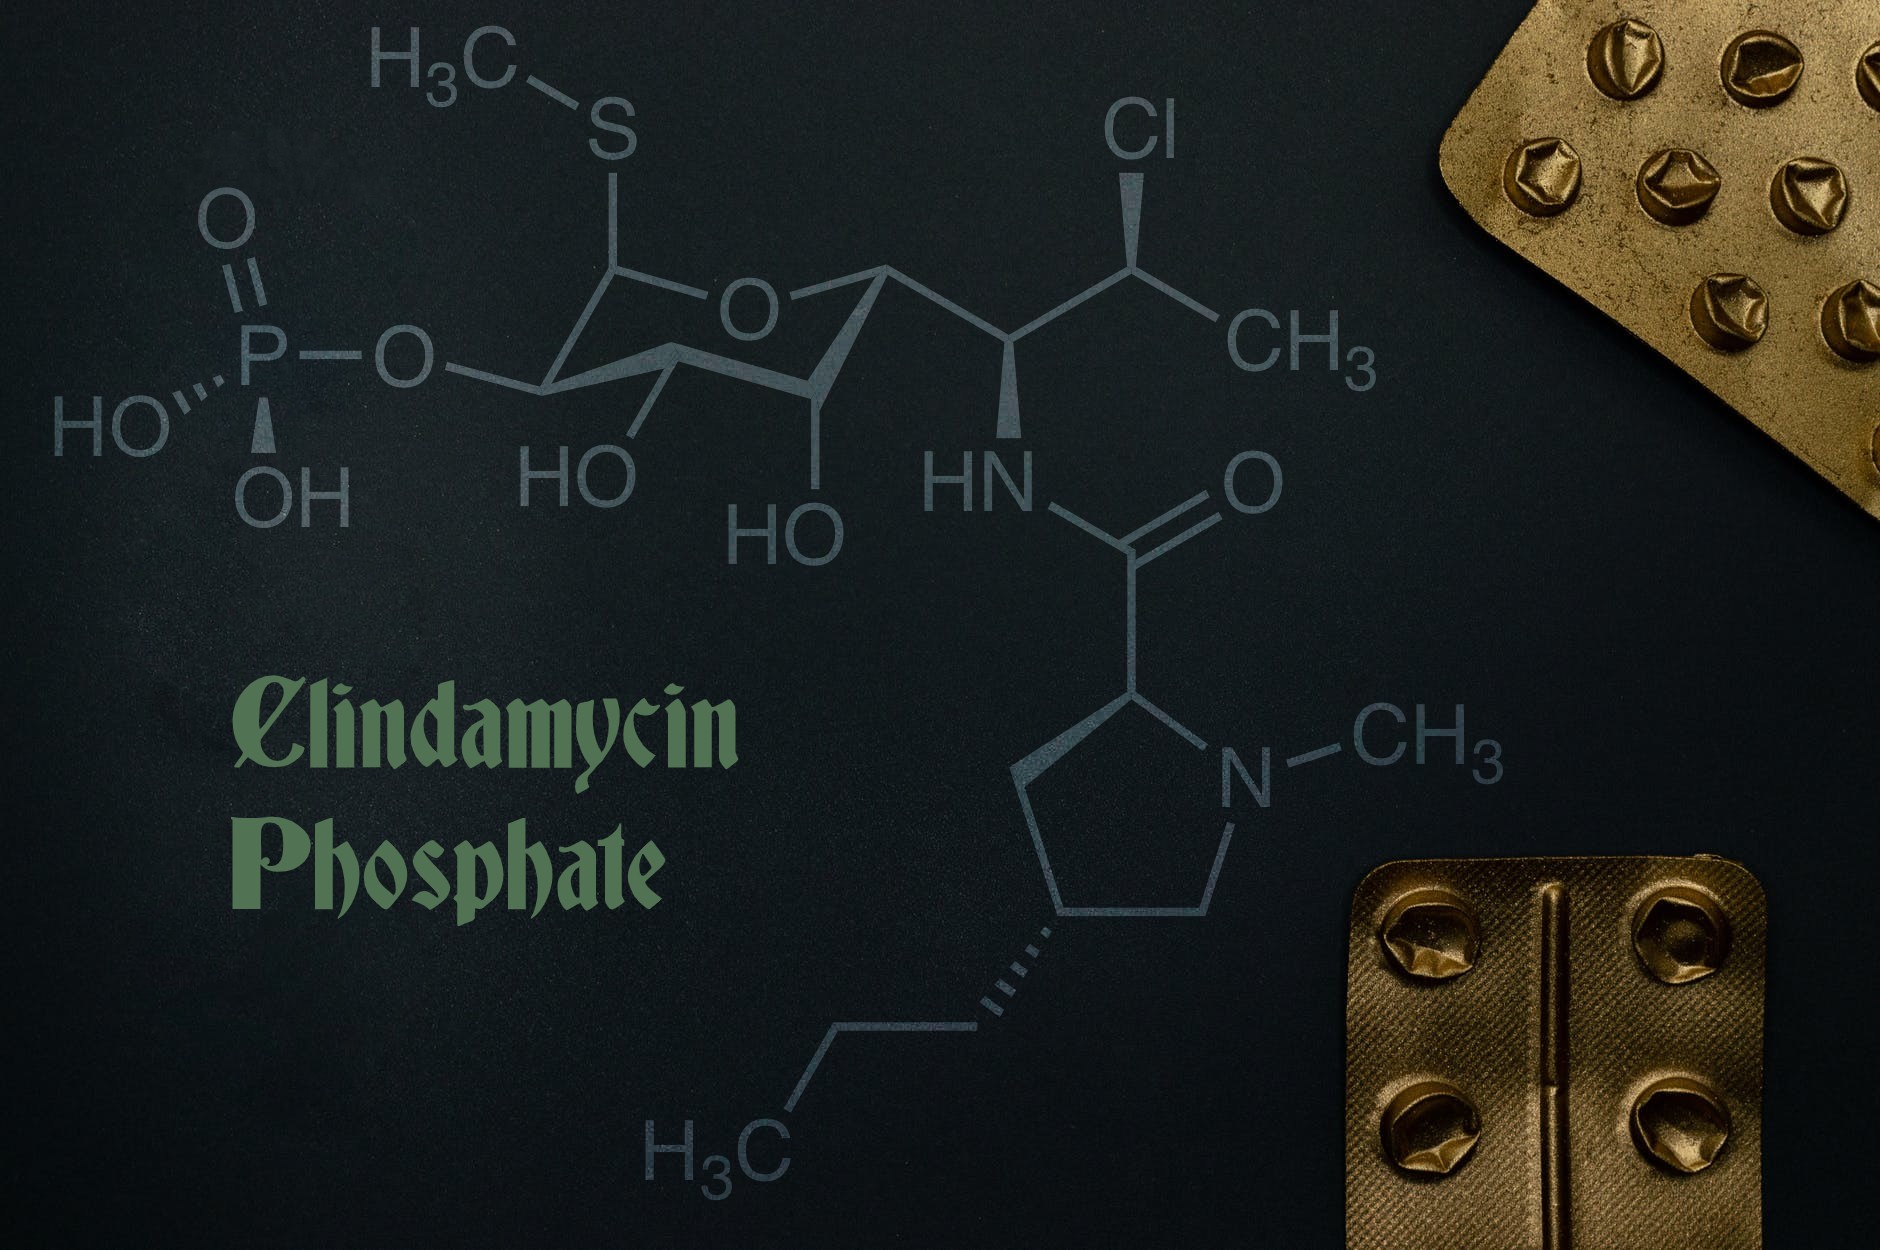 clindamycin phosphate